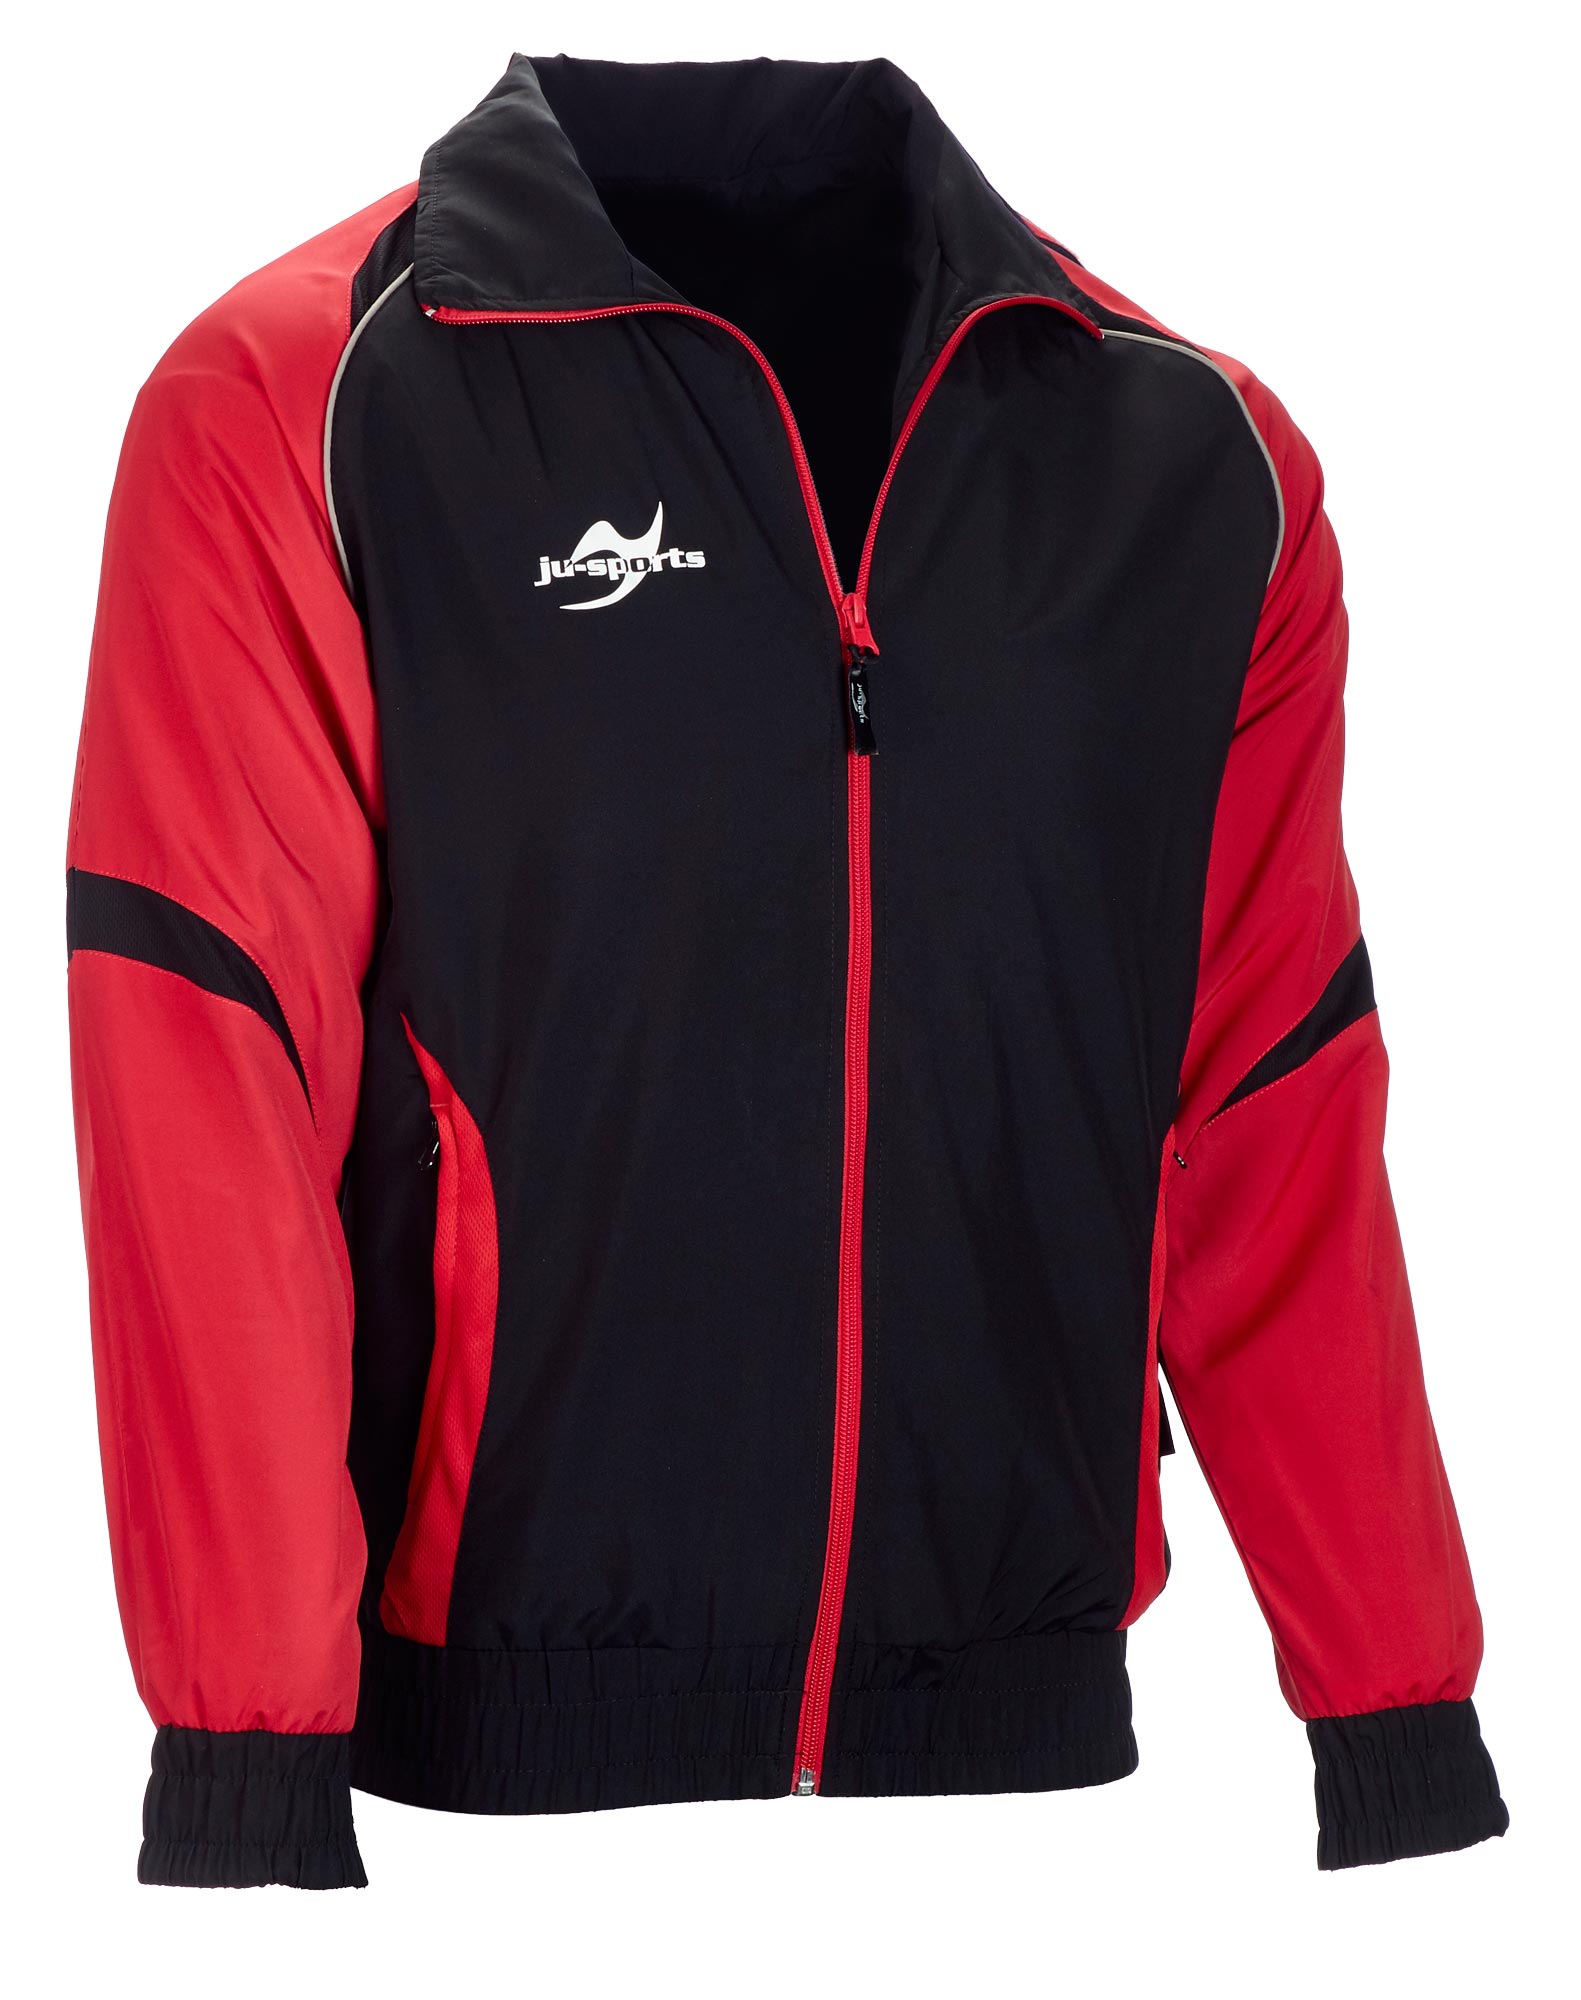 Ju-Sports C2 zip-up team jacket black/red